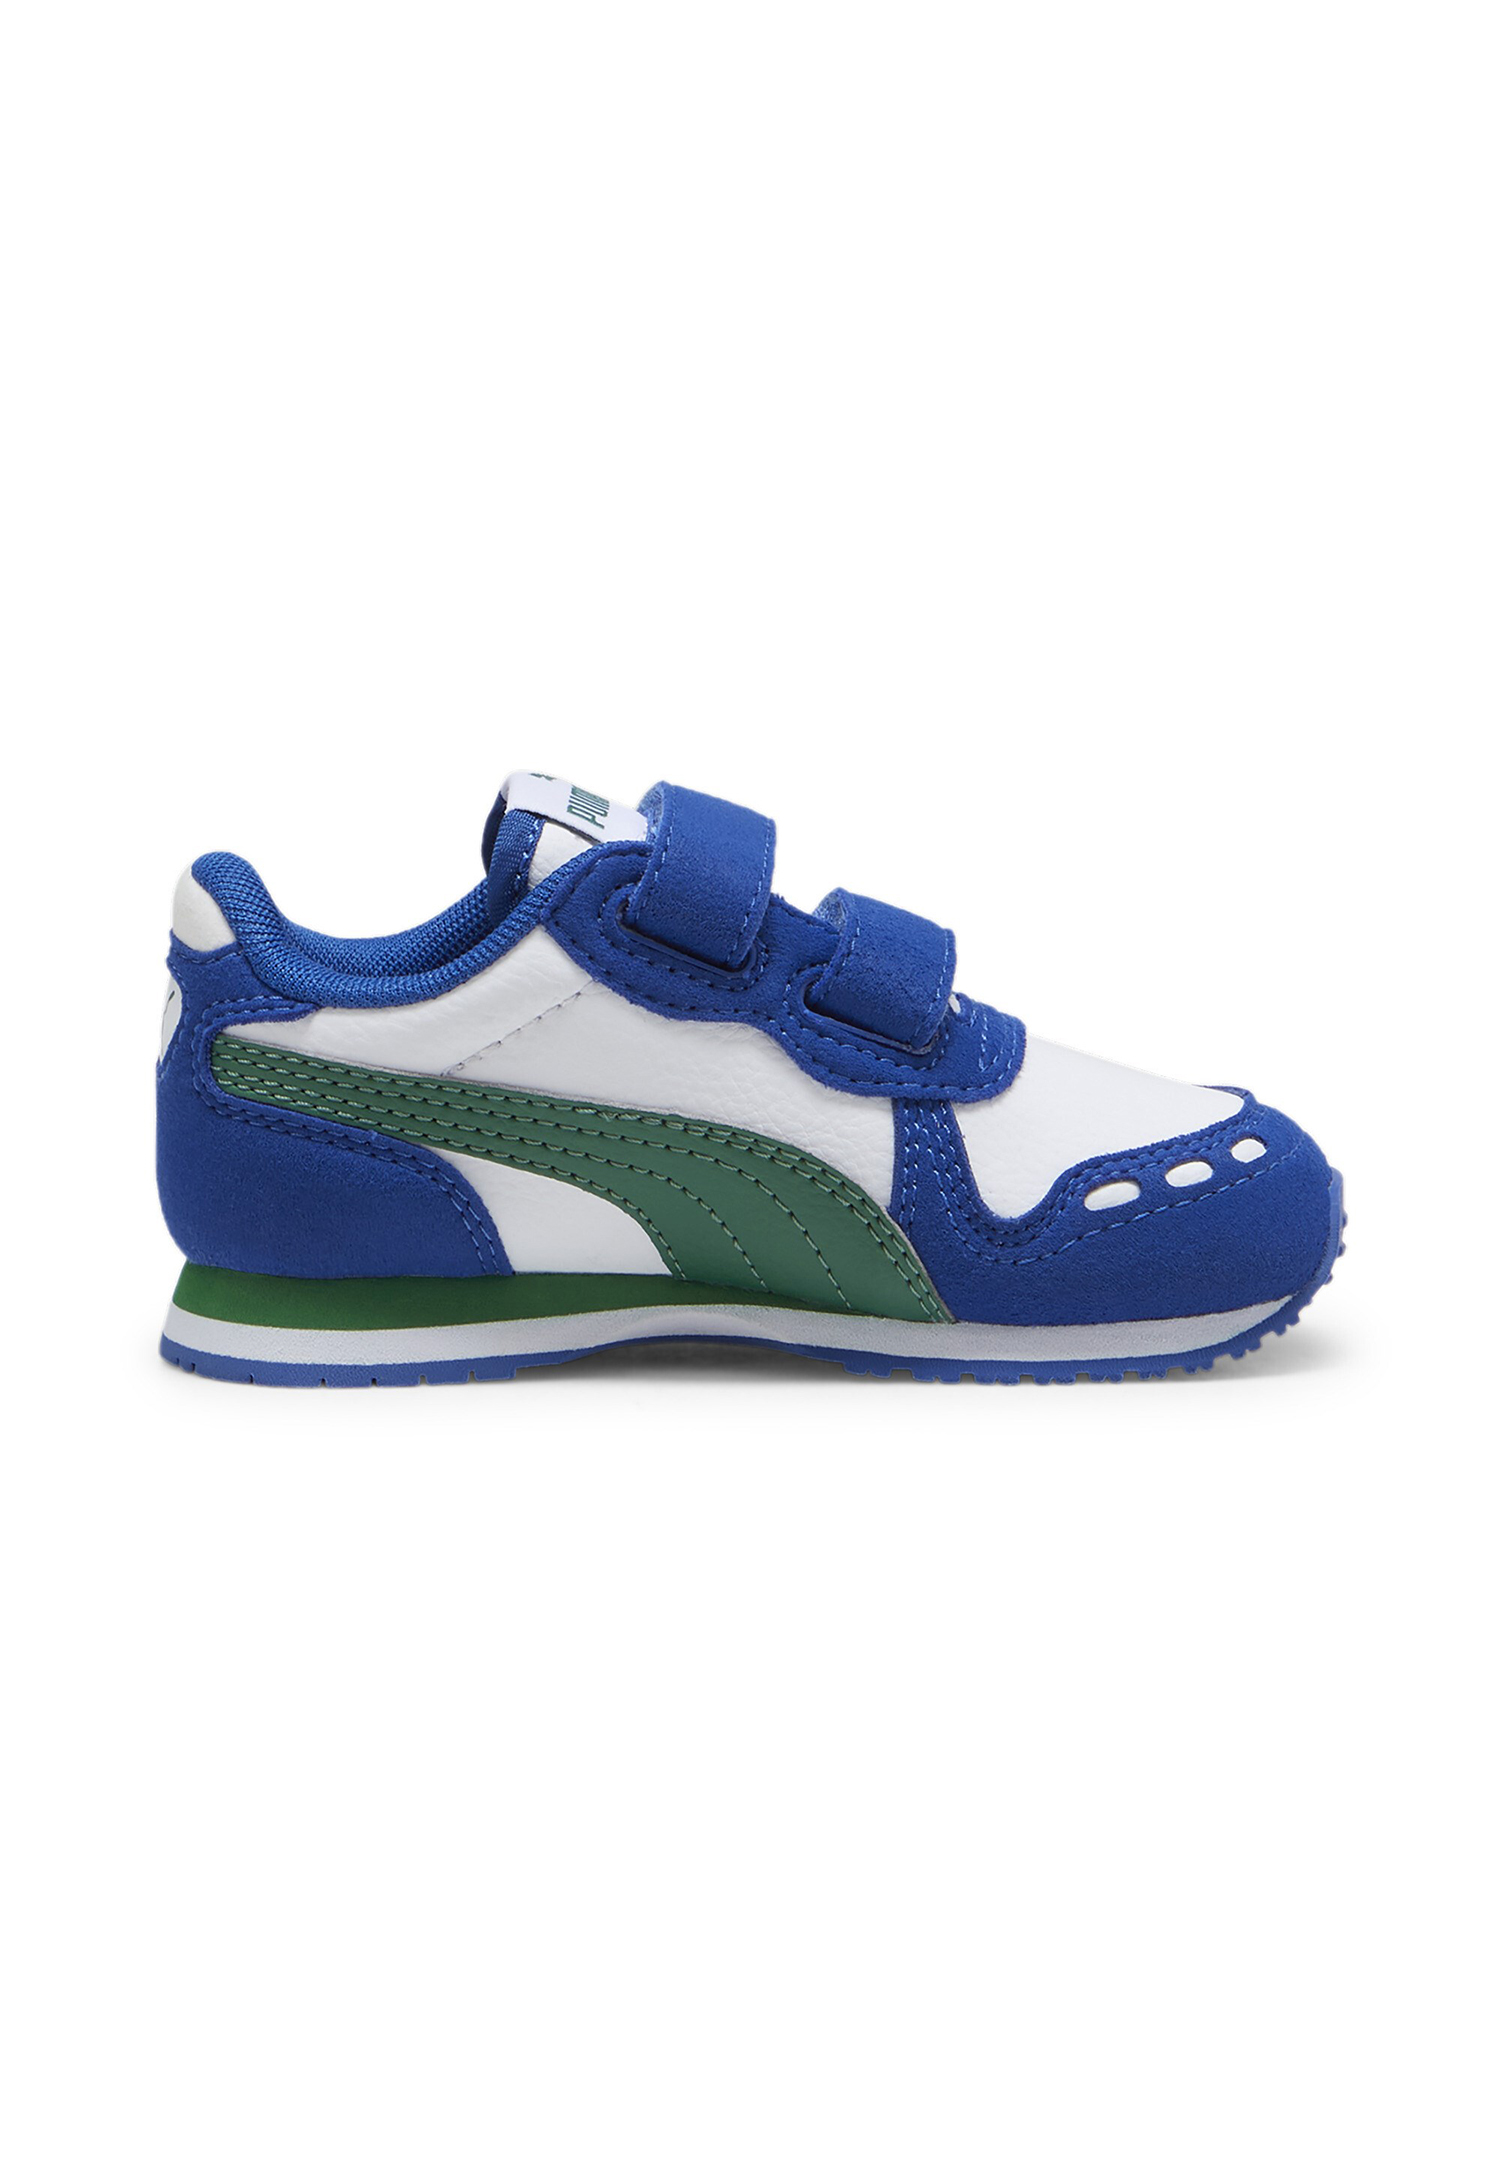 PUMA Cabana Racer SL 20 V Inf Kinder Sneaker Turnschuhe 383731 13 blau/weiß/grün